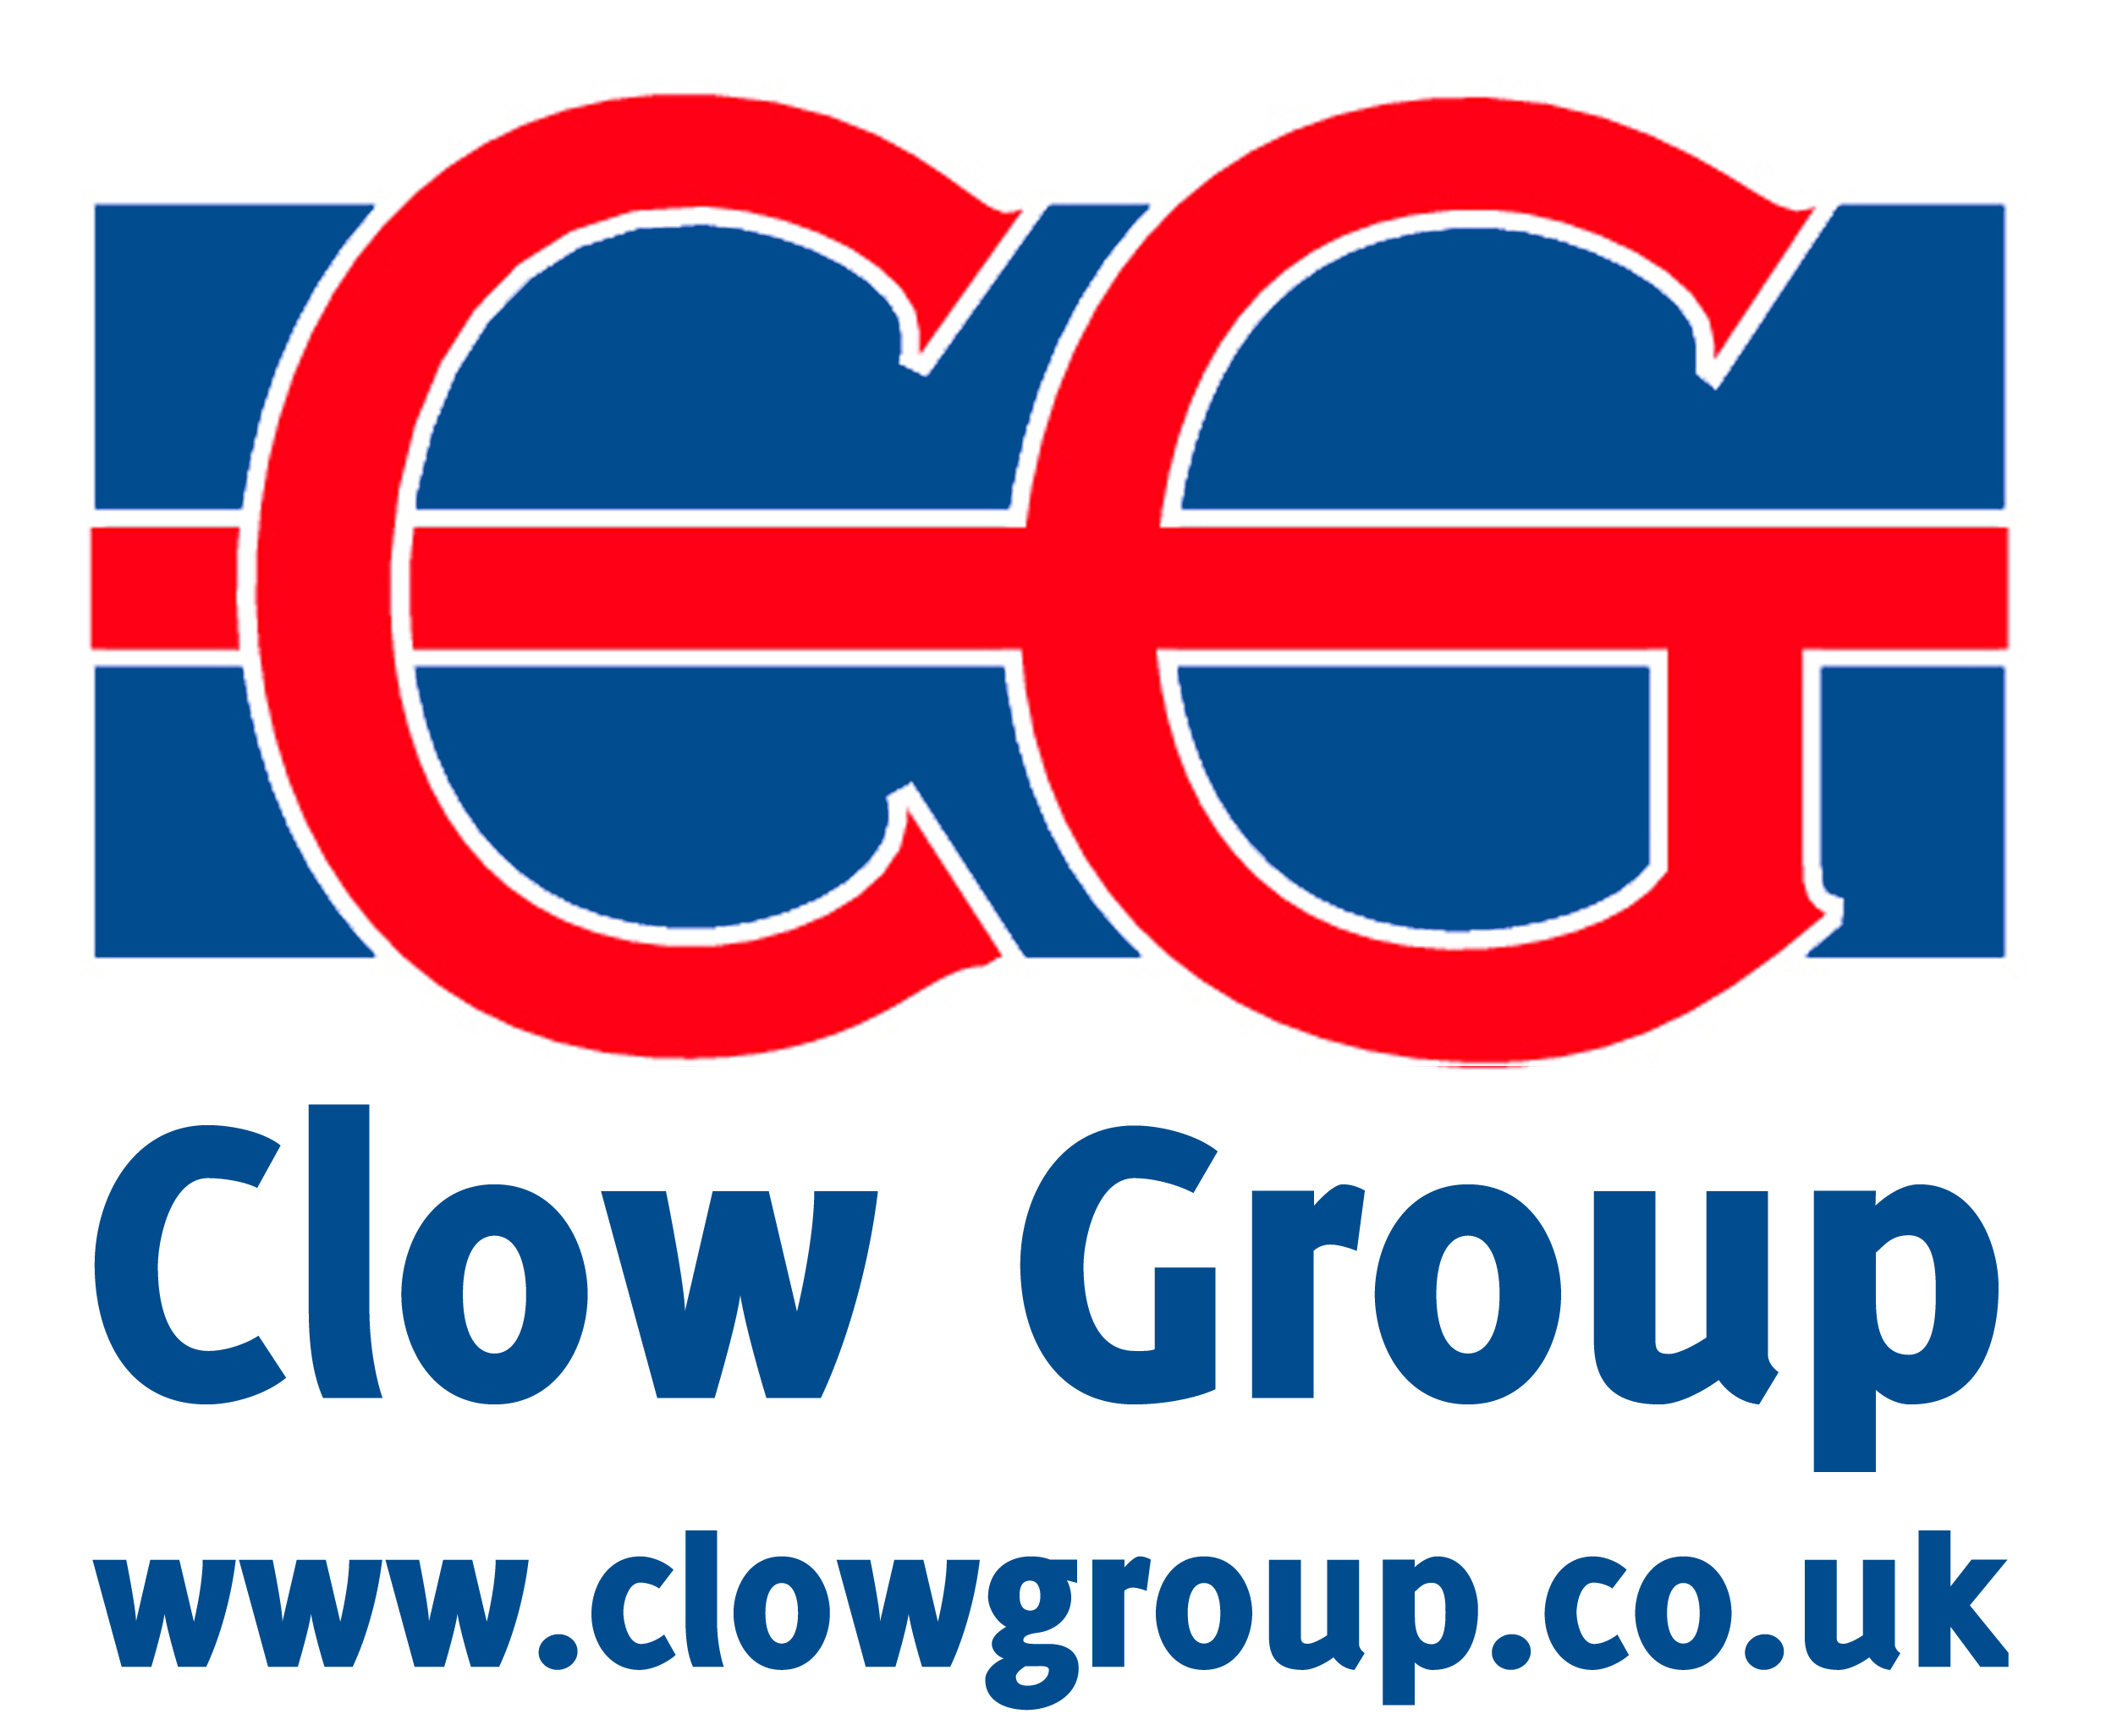 Clow Group Logo